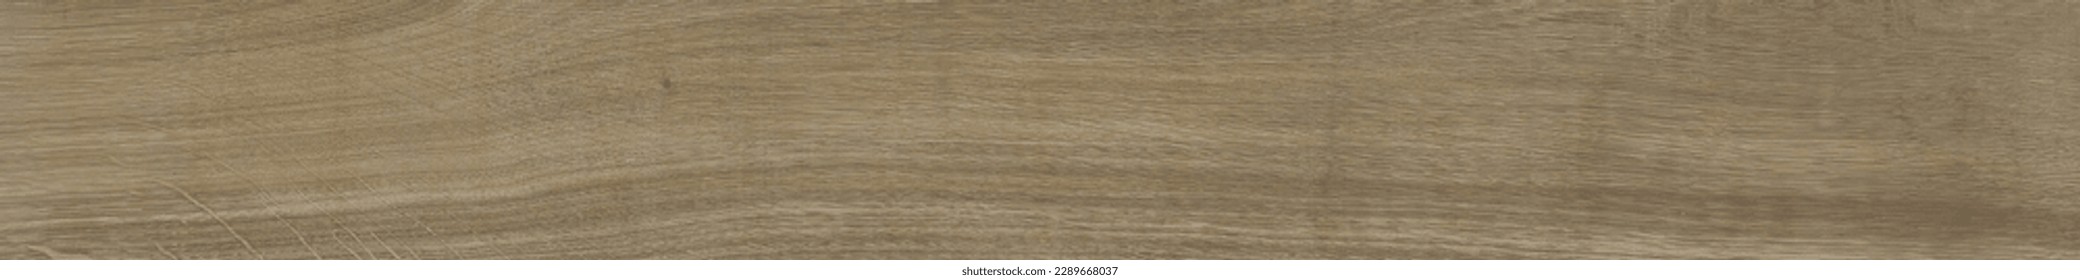 wood floor texture parquet high resolution design - Shutterstock ID 2289668037